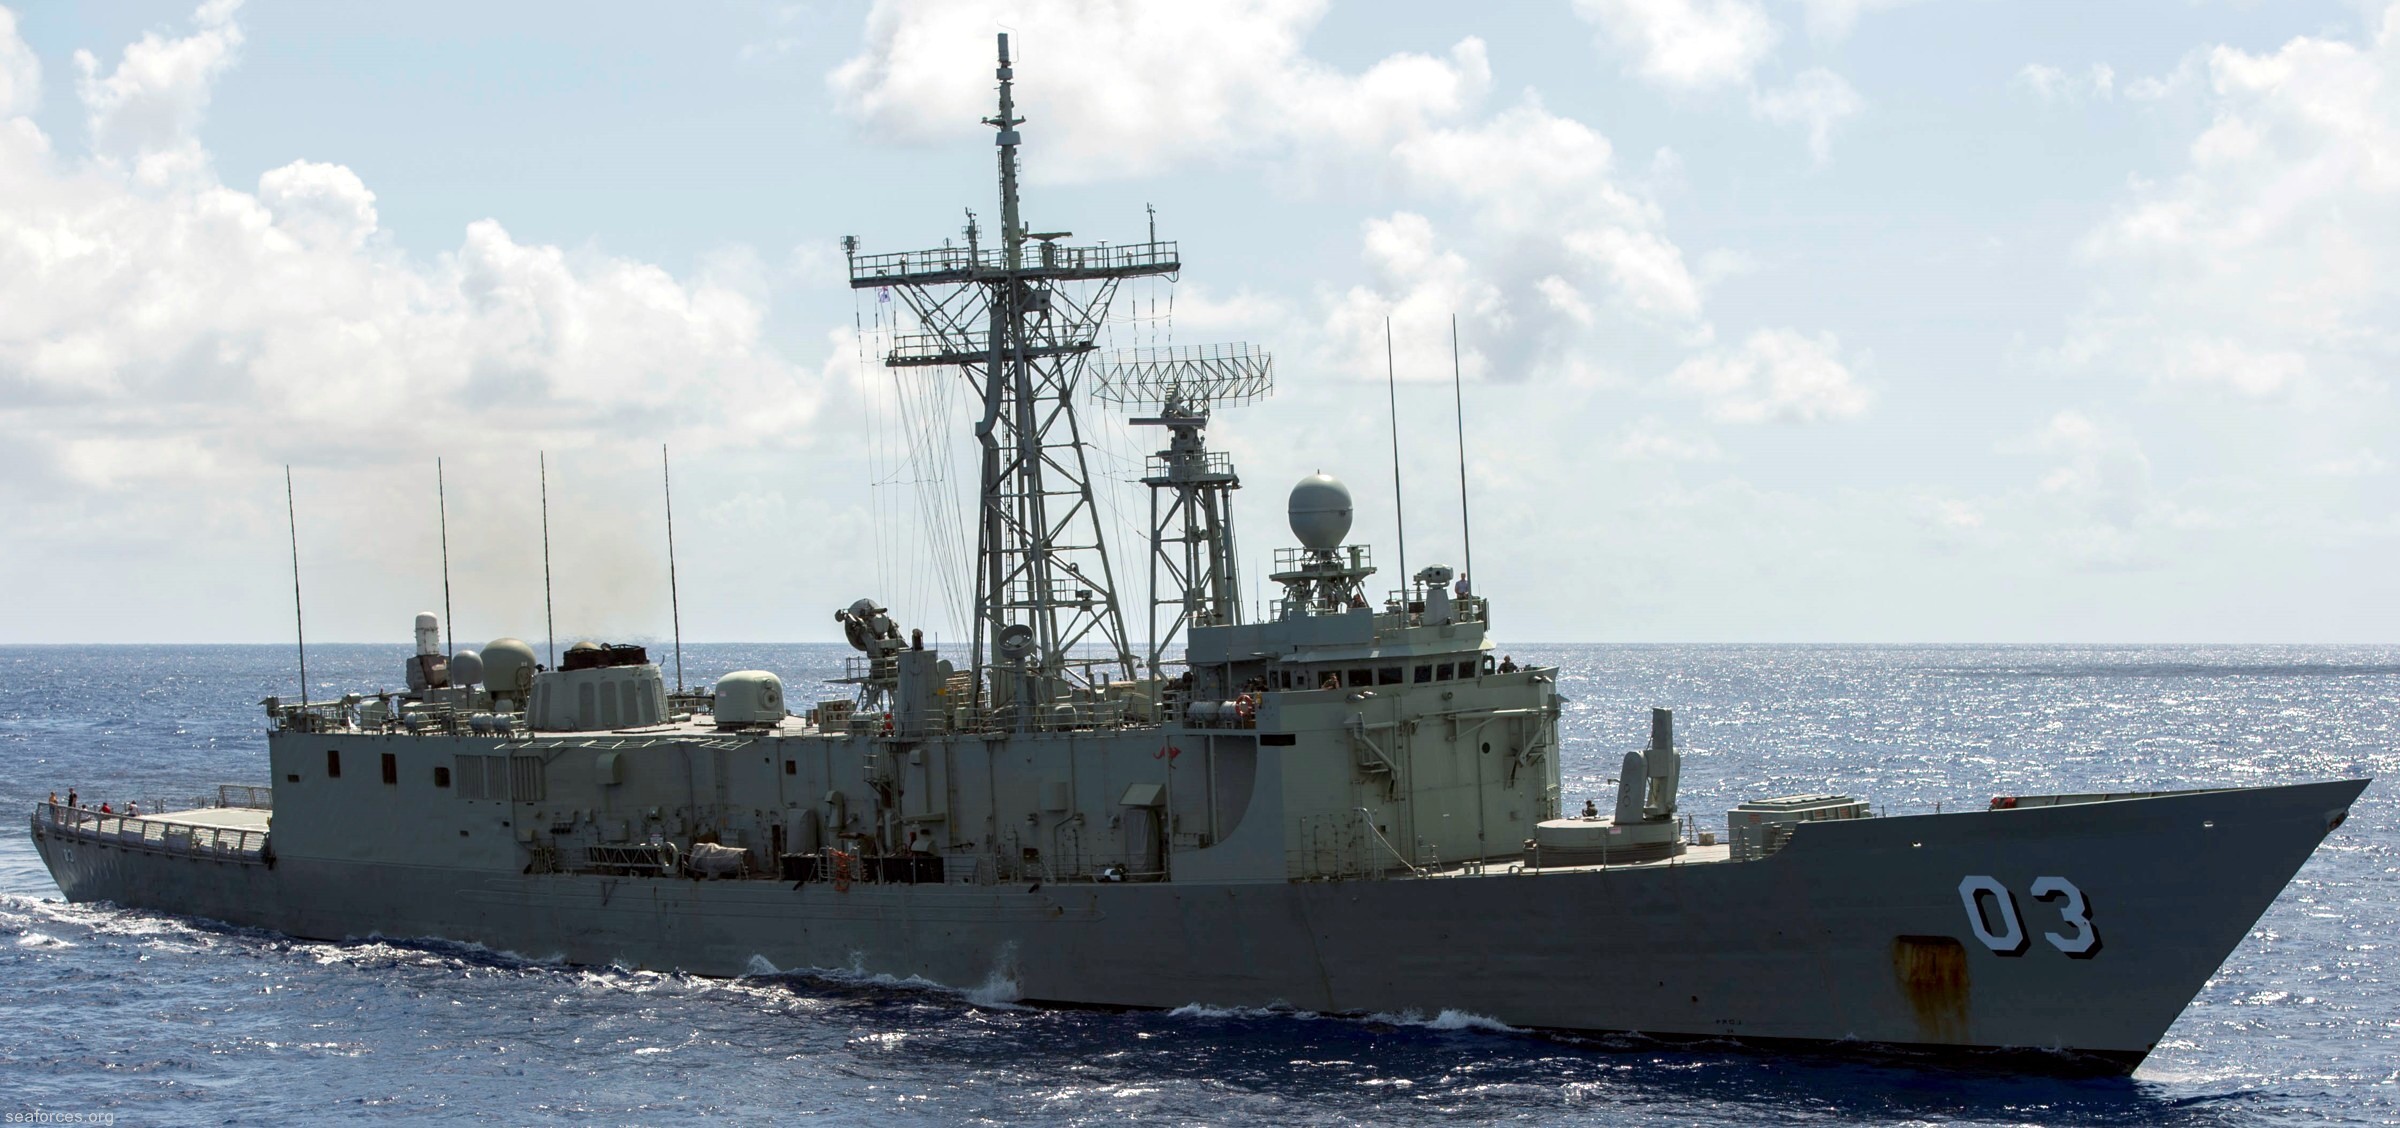 ffg-03 hmas sydney adelaide class frigate royal australian navy 2013 05